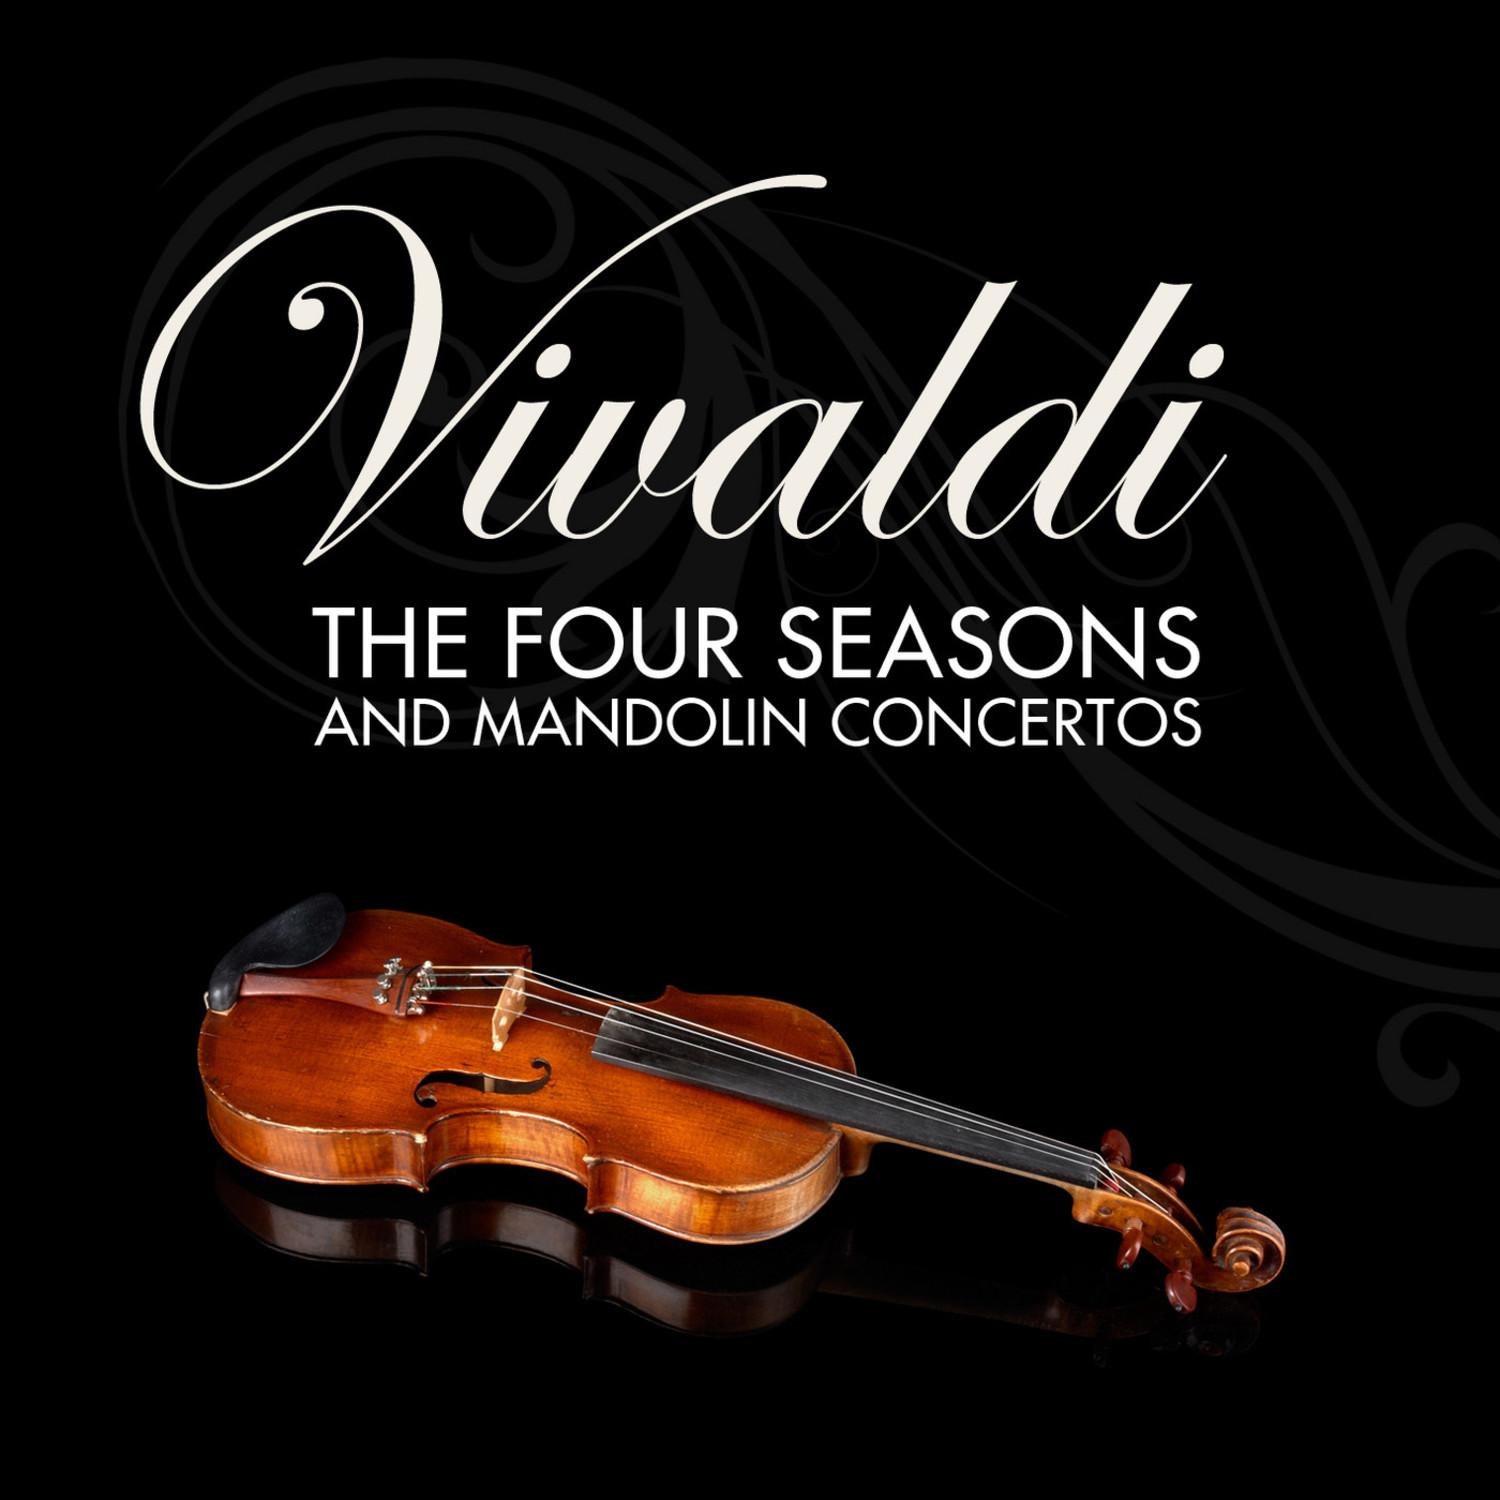 Vivaldi: The Four Seasons and Mandolin Concertos